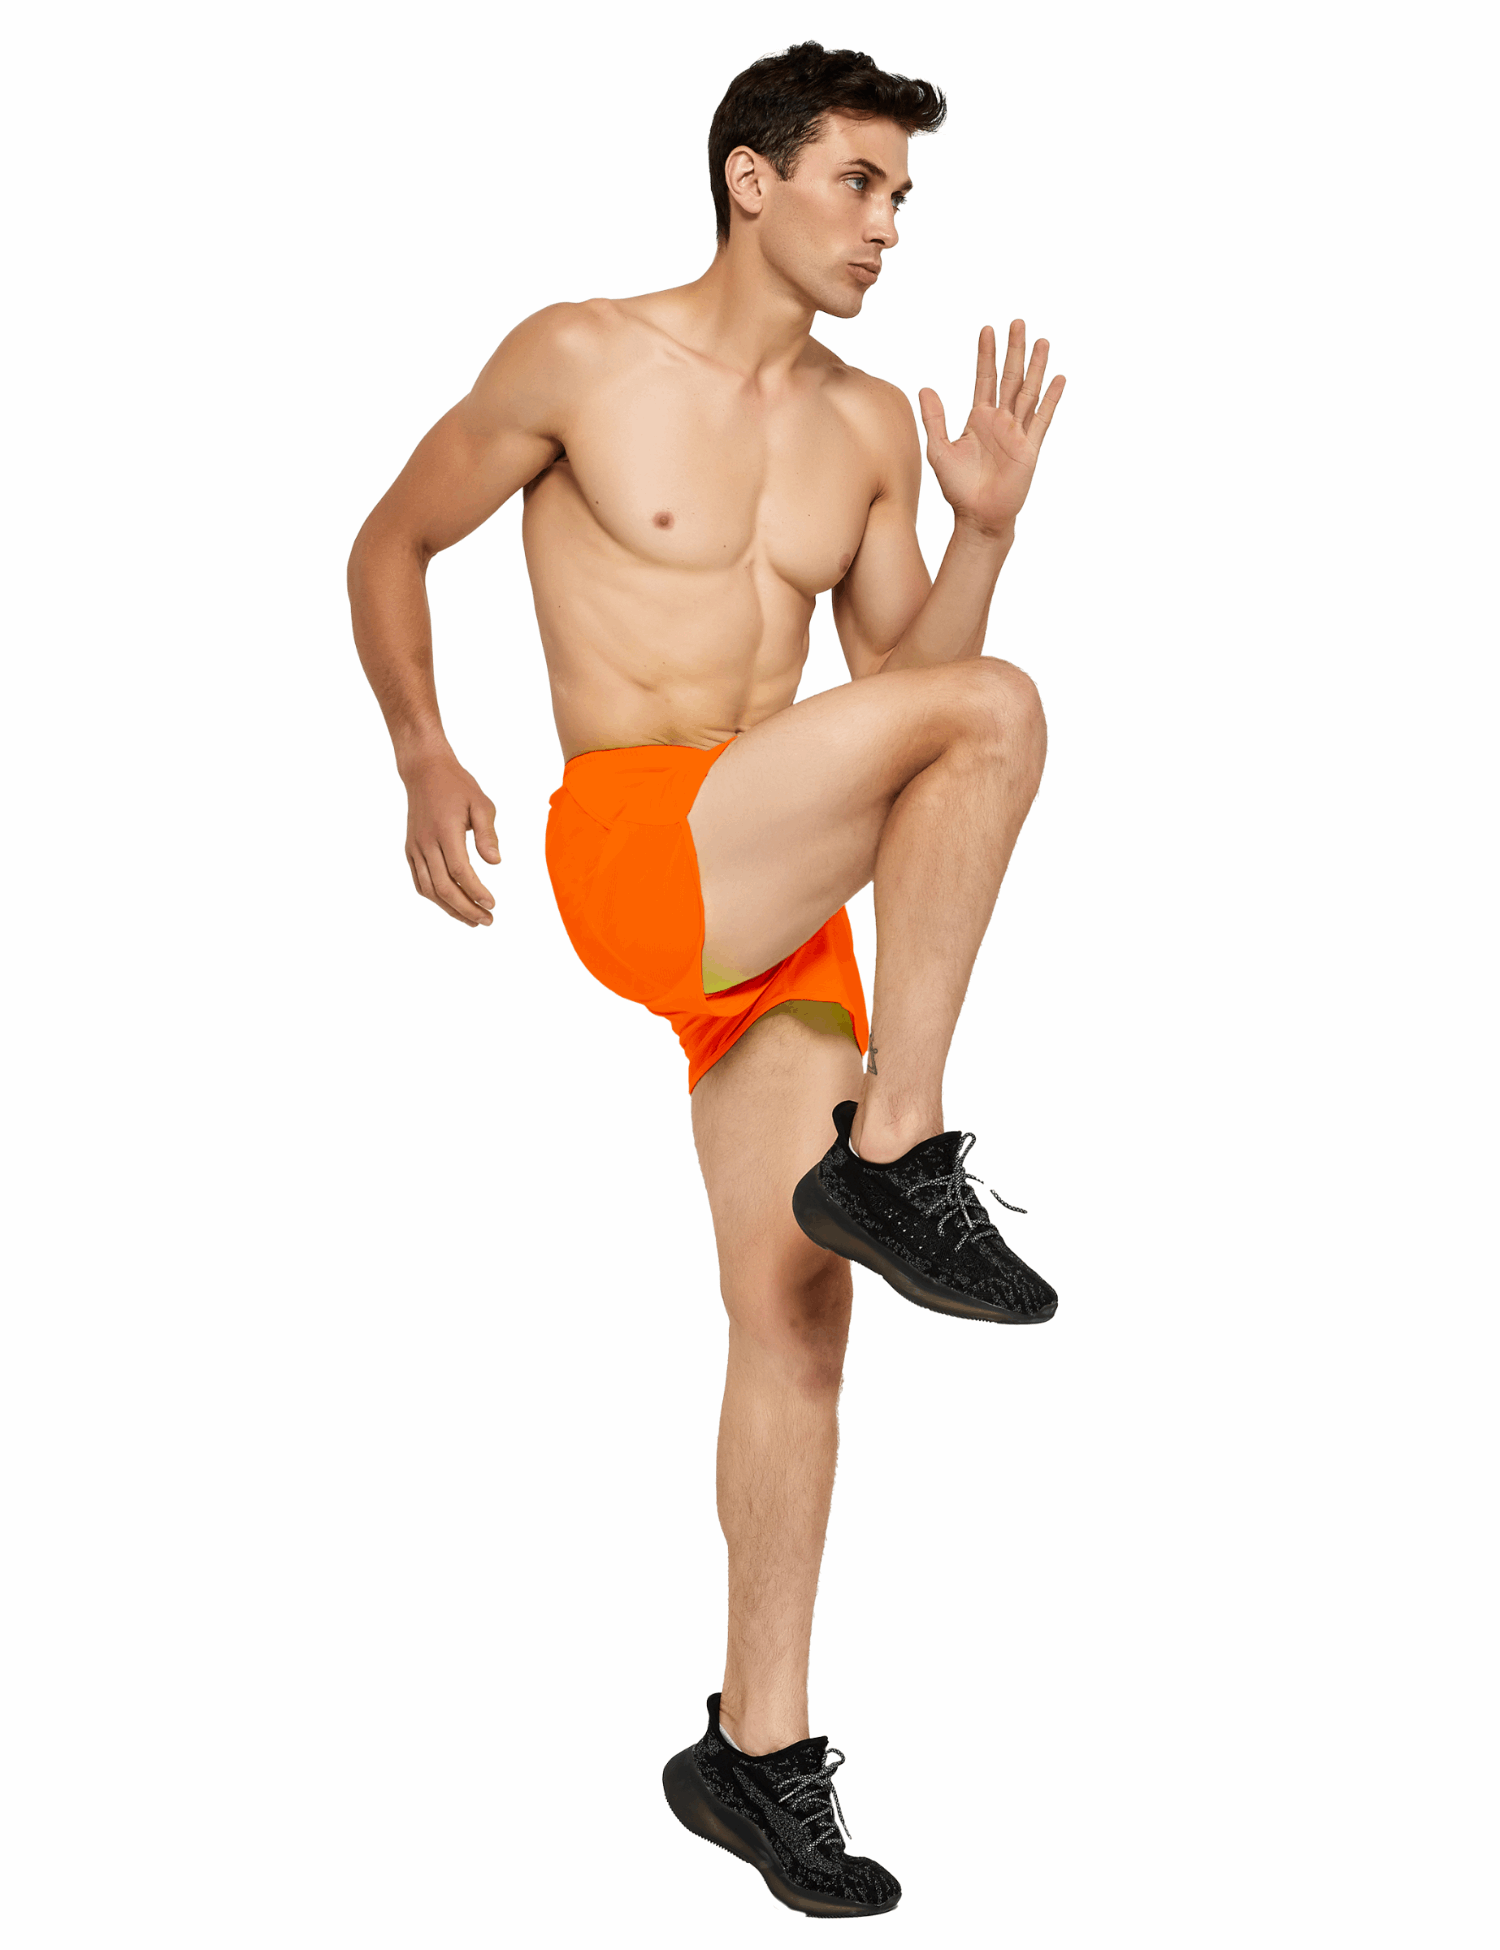 mens 3 inch neon orange running shorts